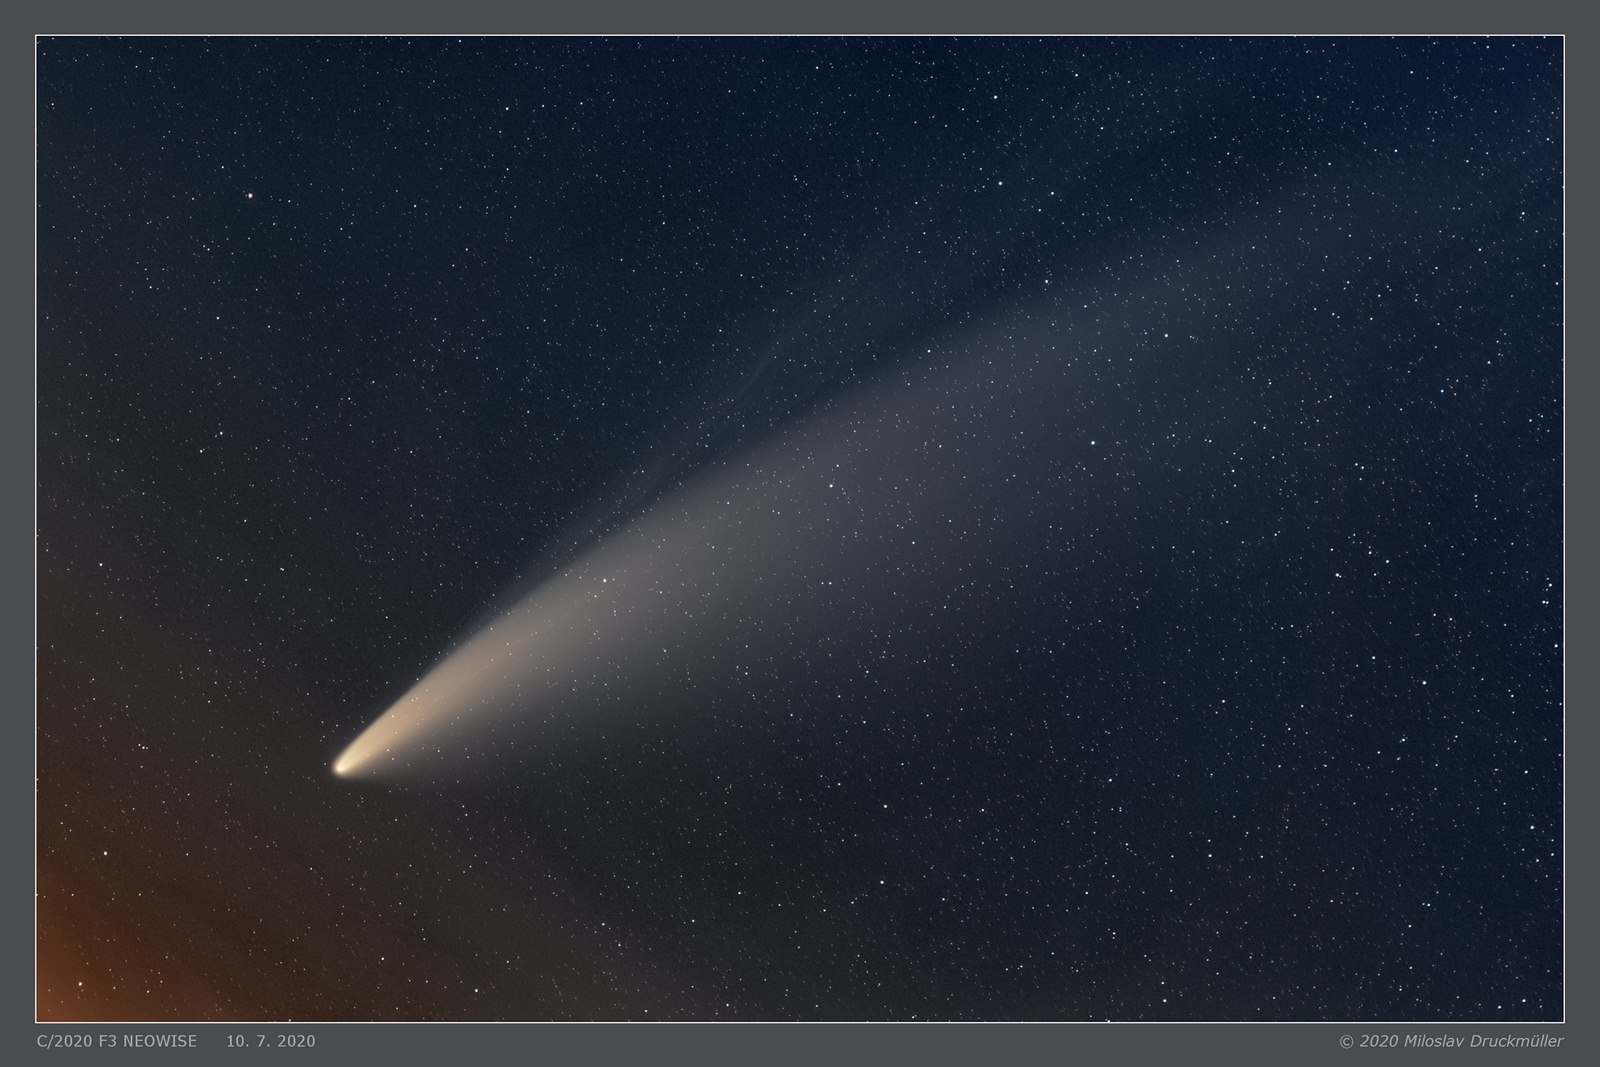 Снимок чешского фотографа Милослава Дракмюллера, который запечатлел комету Neowise. Источник www.vinegret.cz